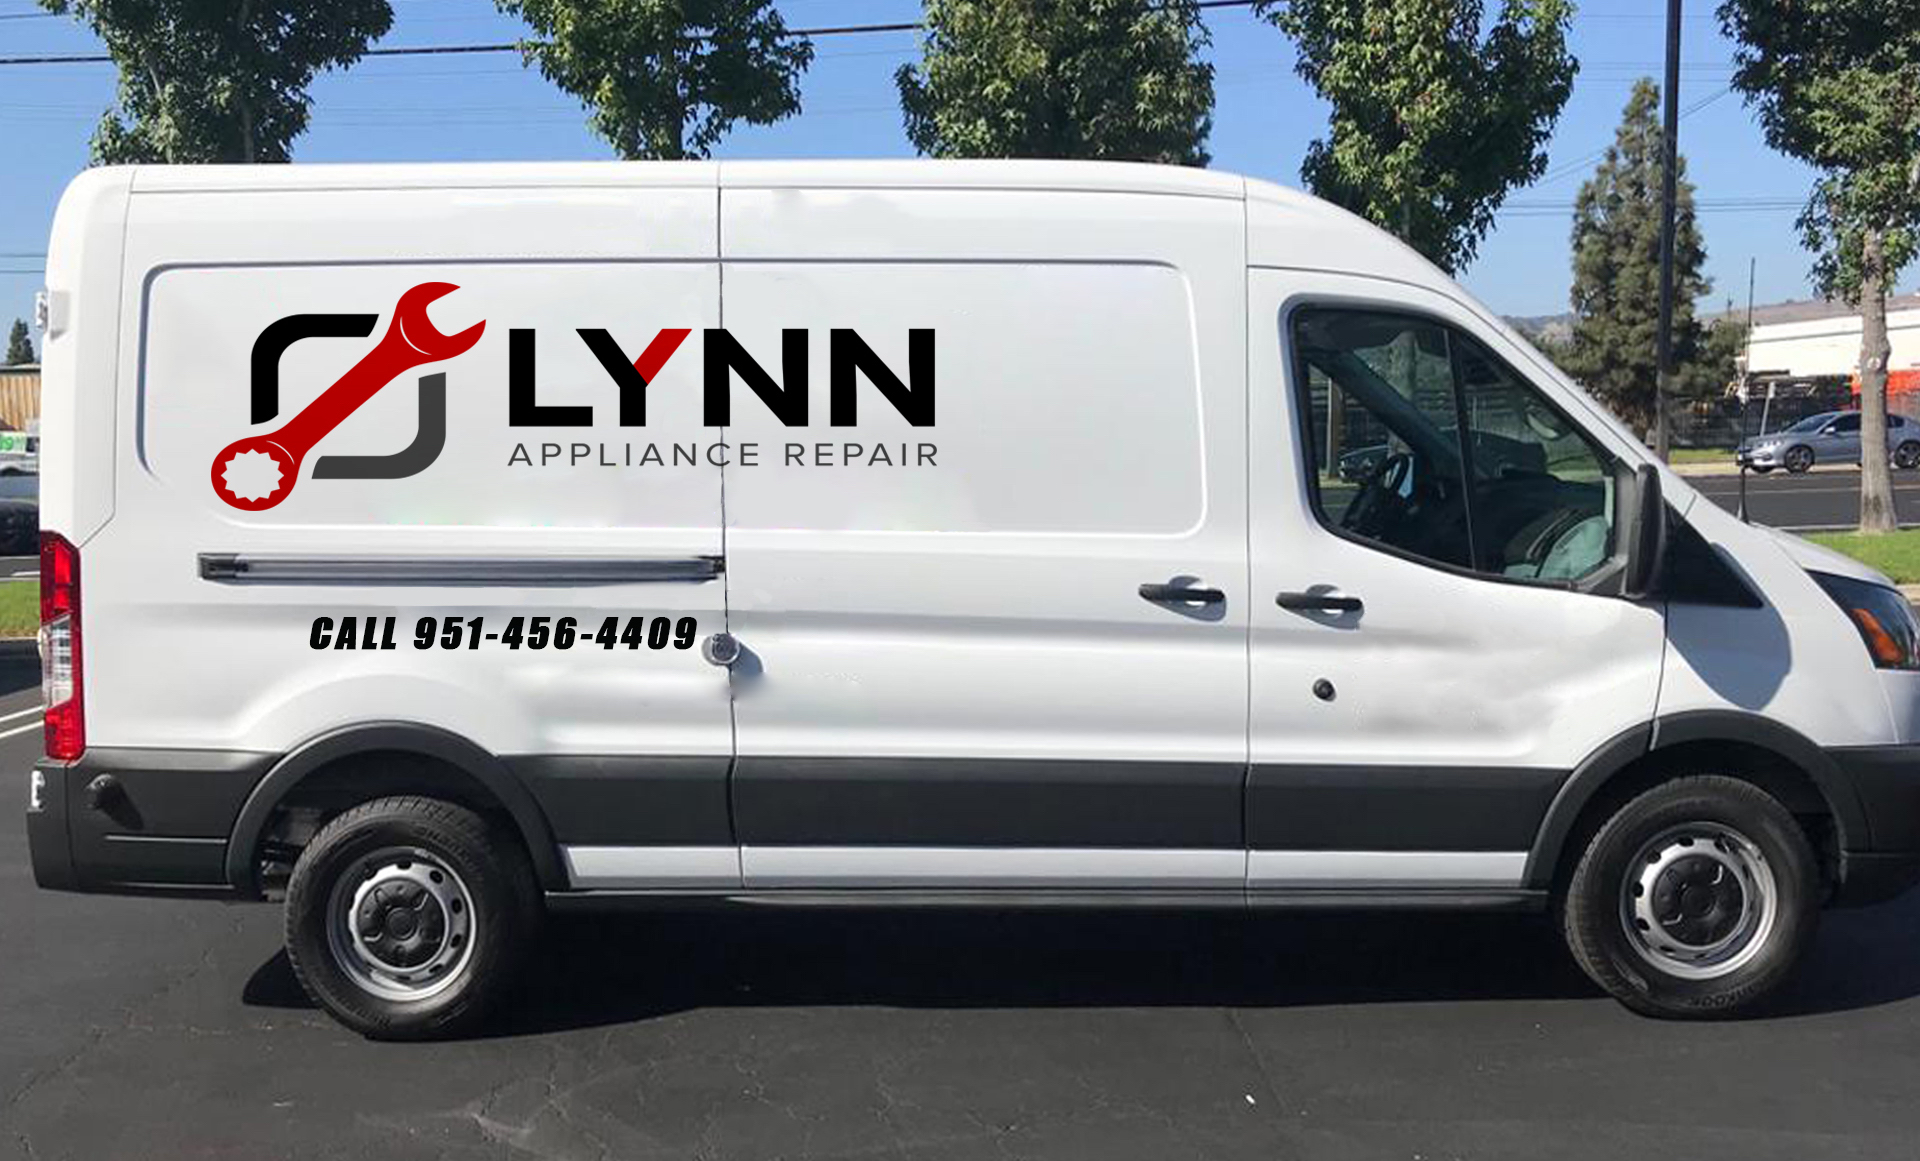 lynn appliance repair in downey